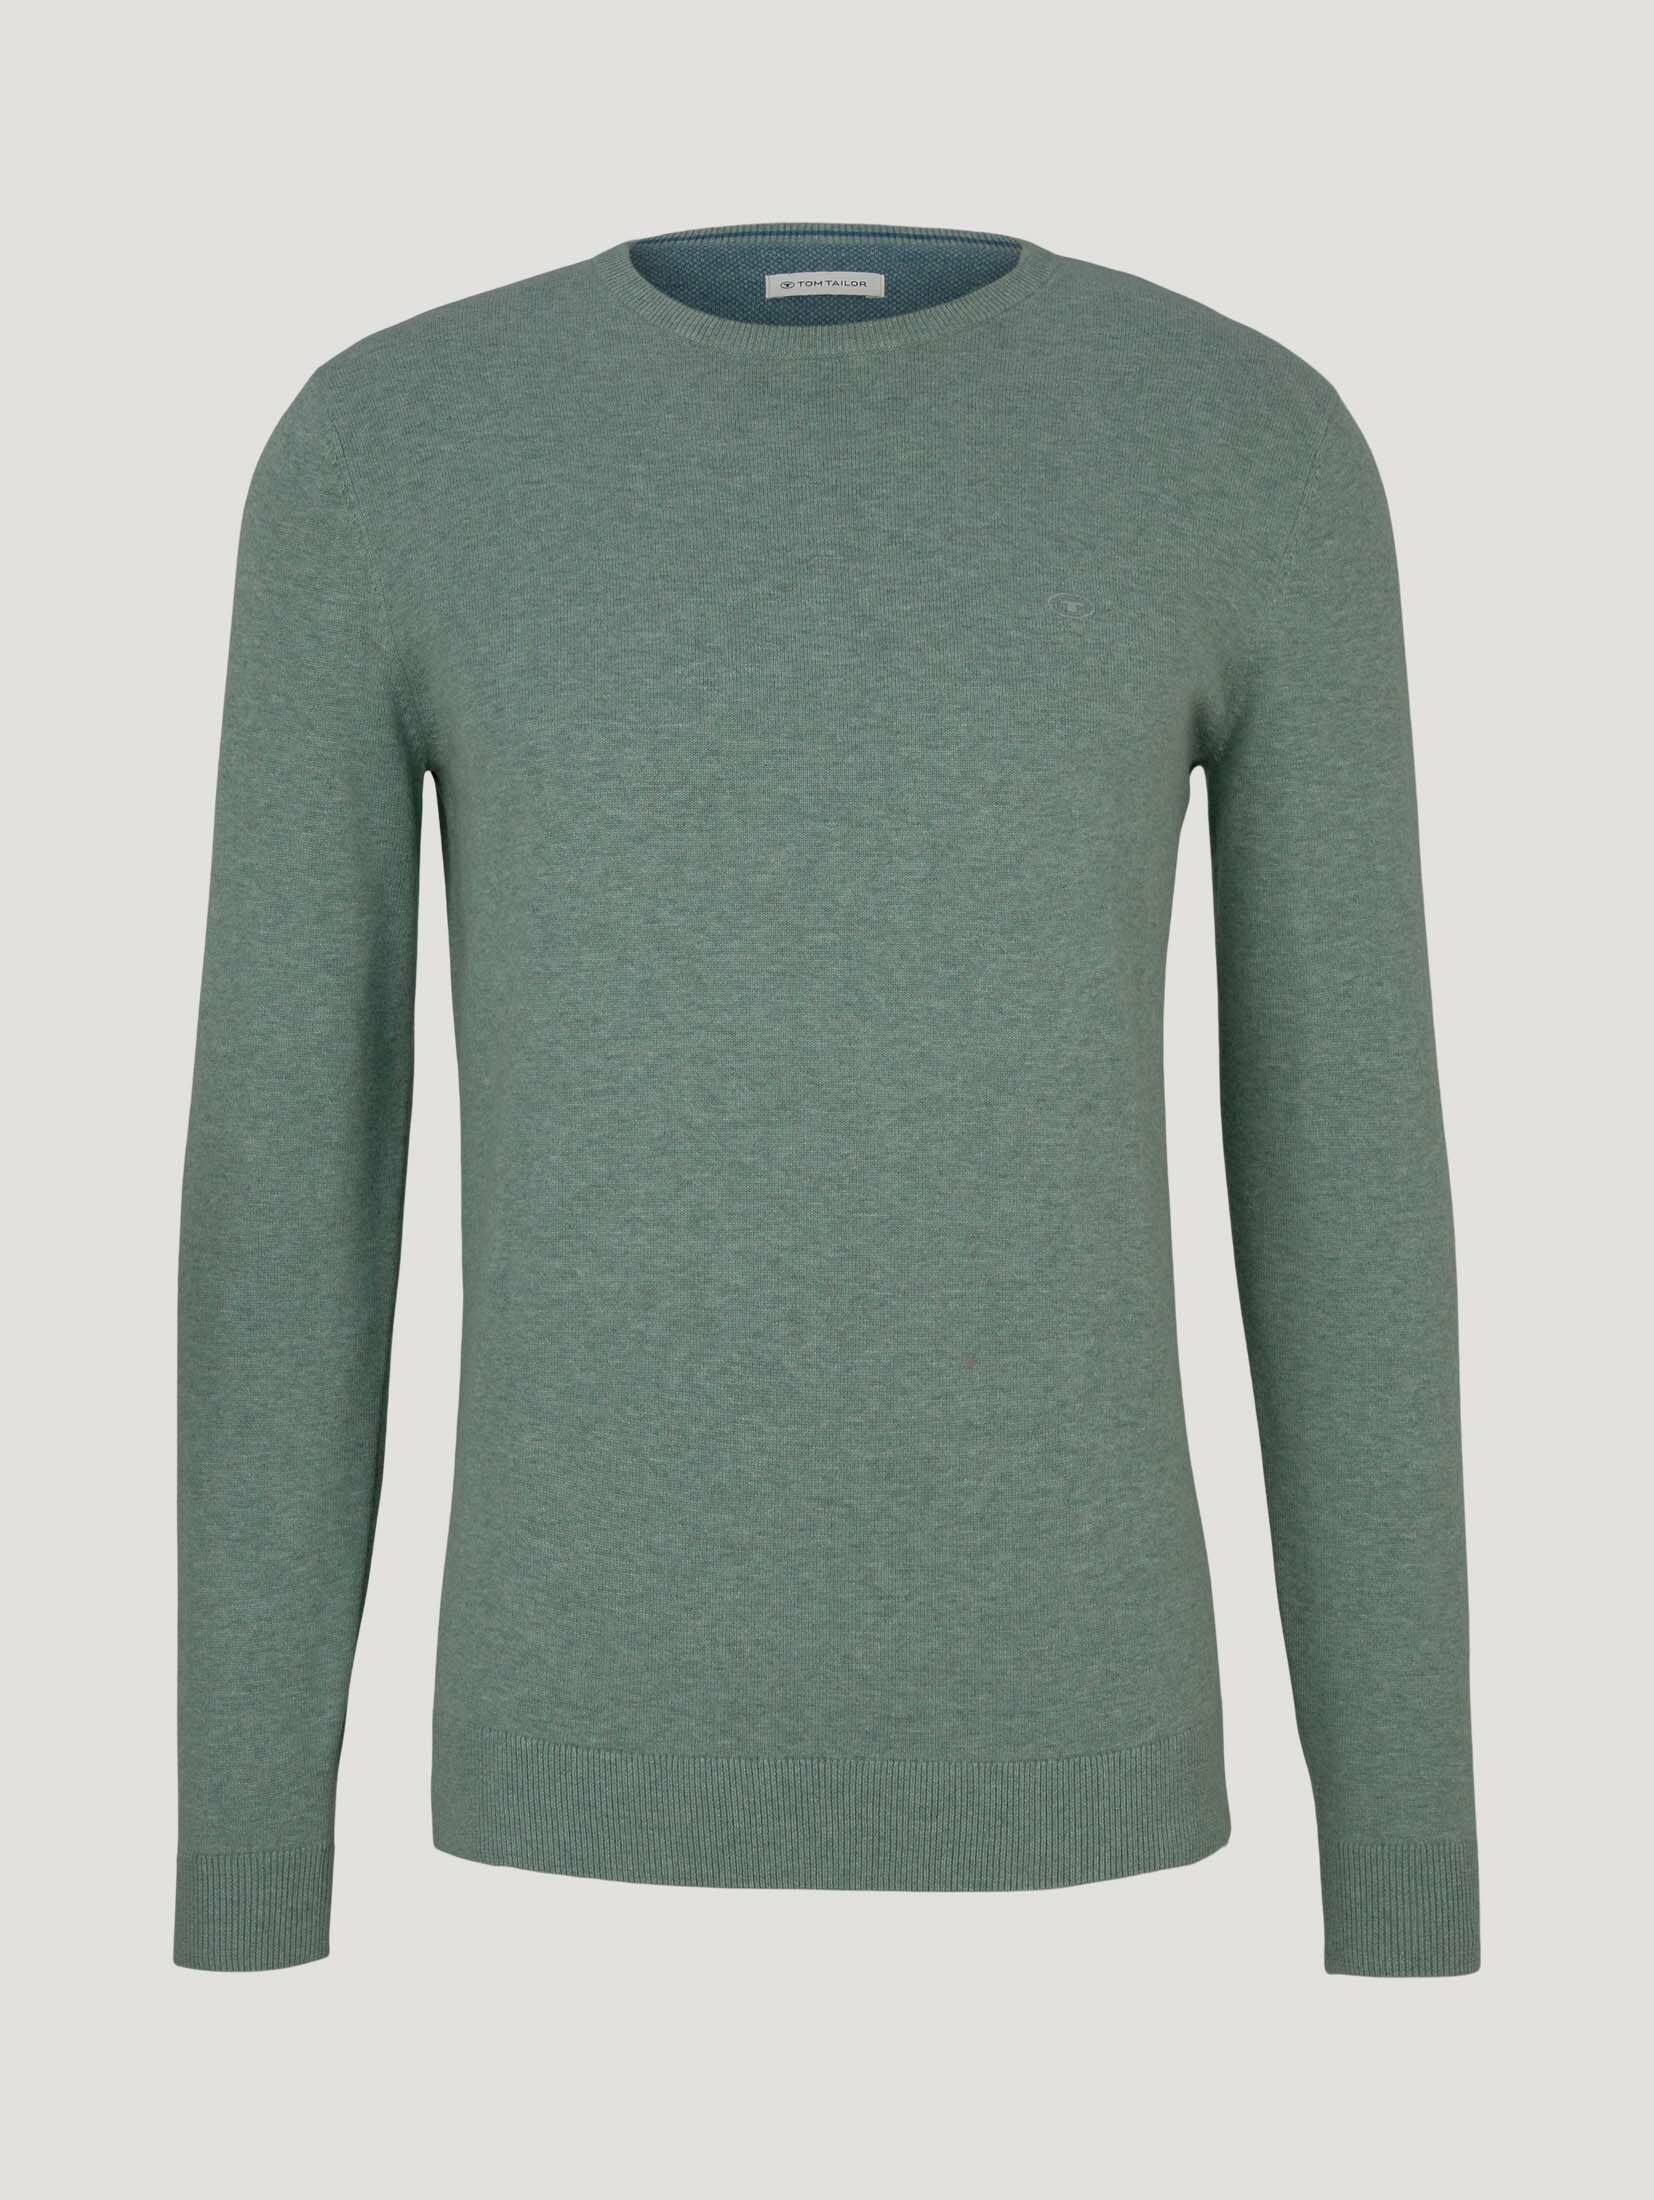 Пуловер Tom Tailor Tom Tailor Strick, зеленый пуловер tom tailor размер s голубой